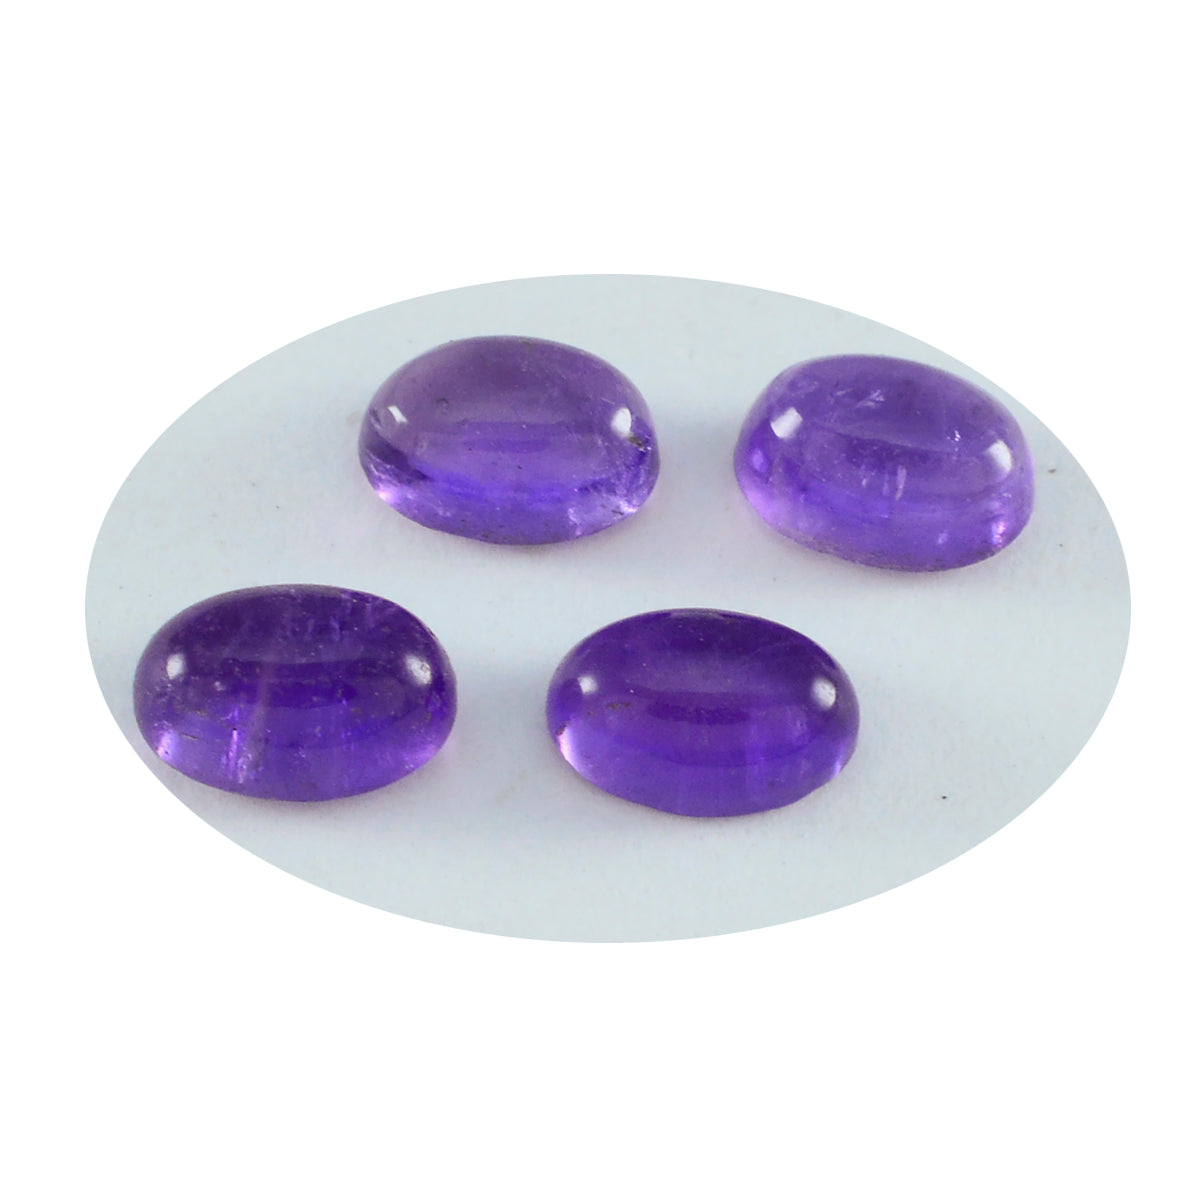 Riyogems 1 Stück lila Amethyst-Cabochon, 5 x 7 mm, ovale Form, schöner Qualitäts-Edelstein